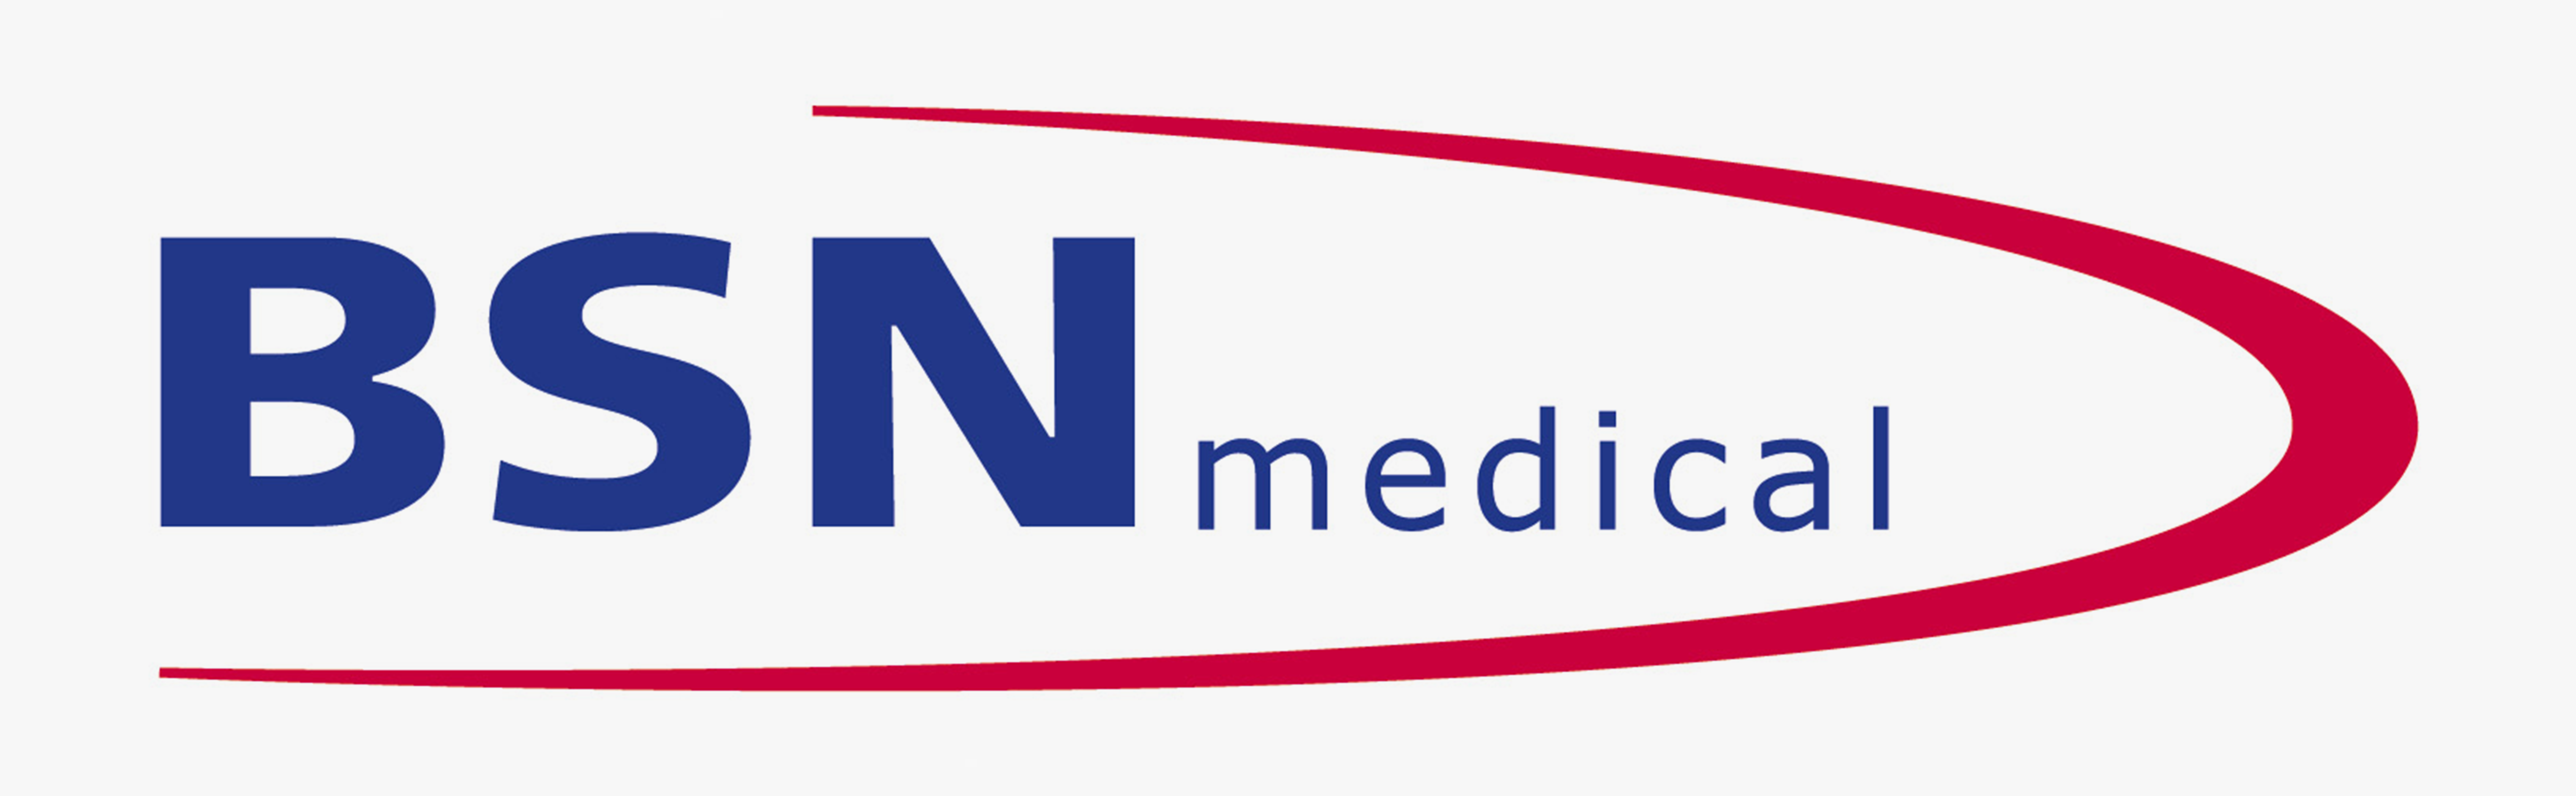 BSN Medical/Jobst